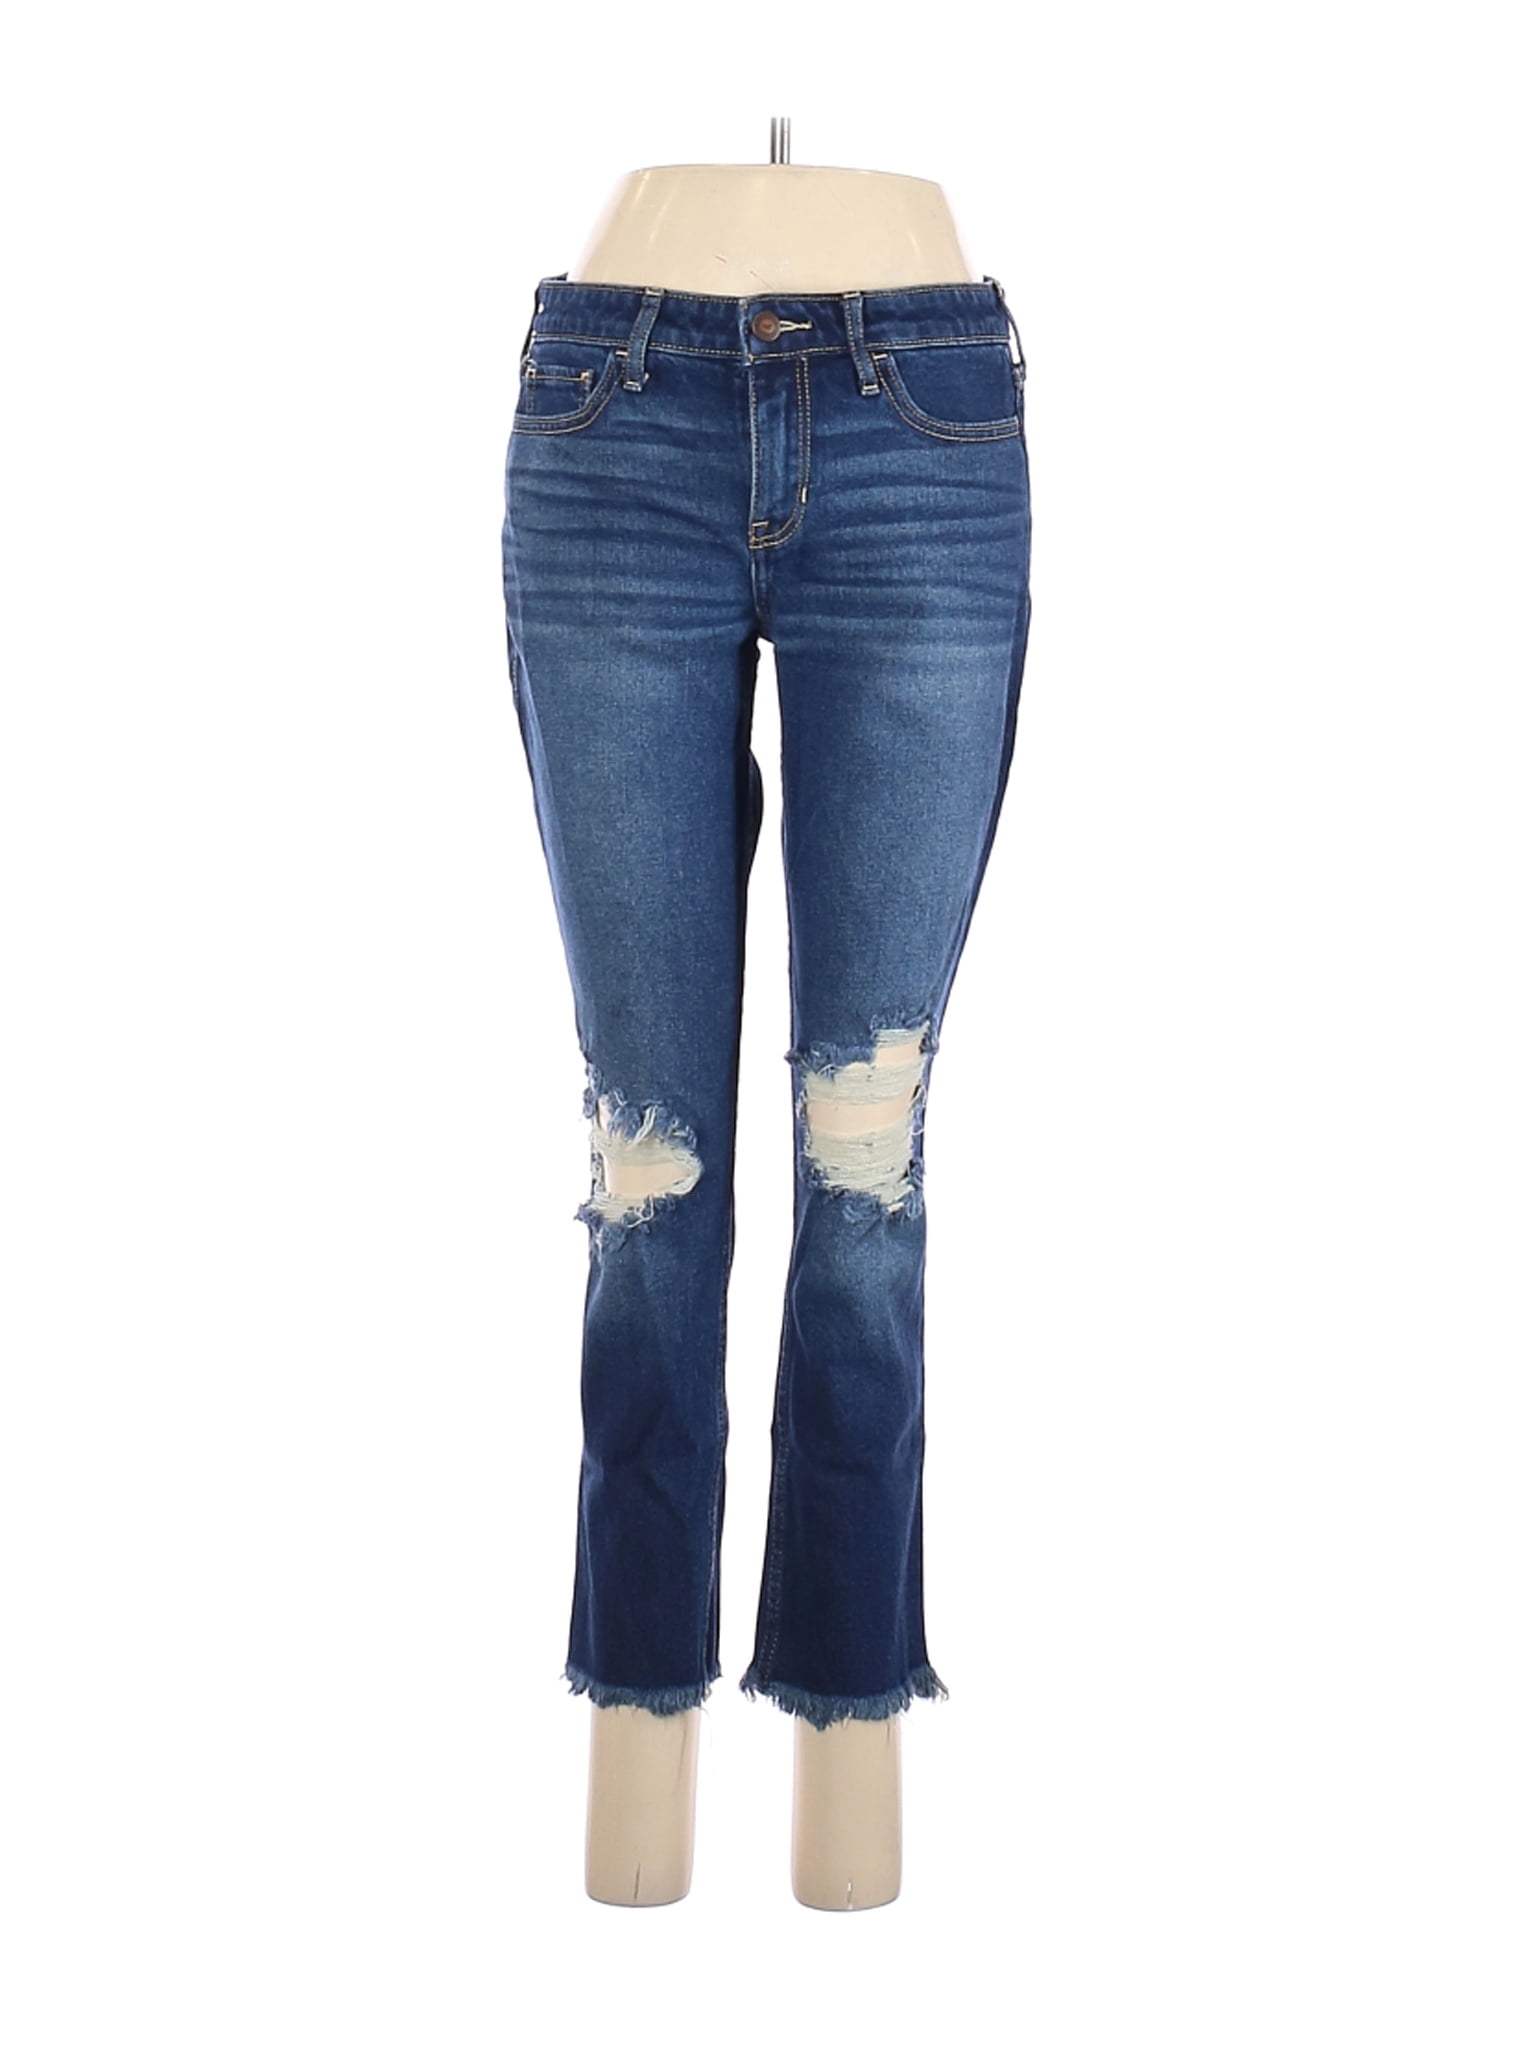 size 7 hollister jeans